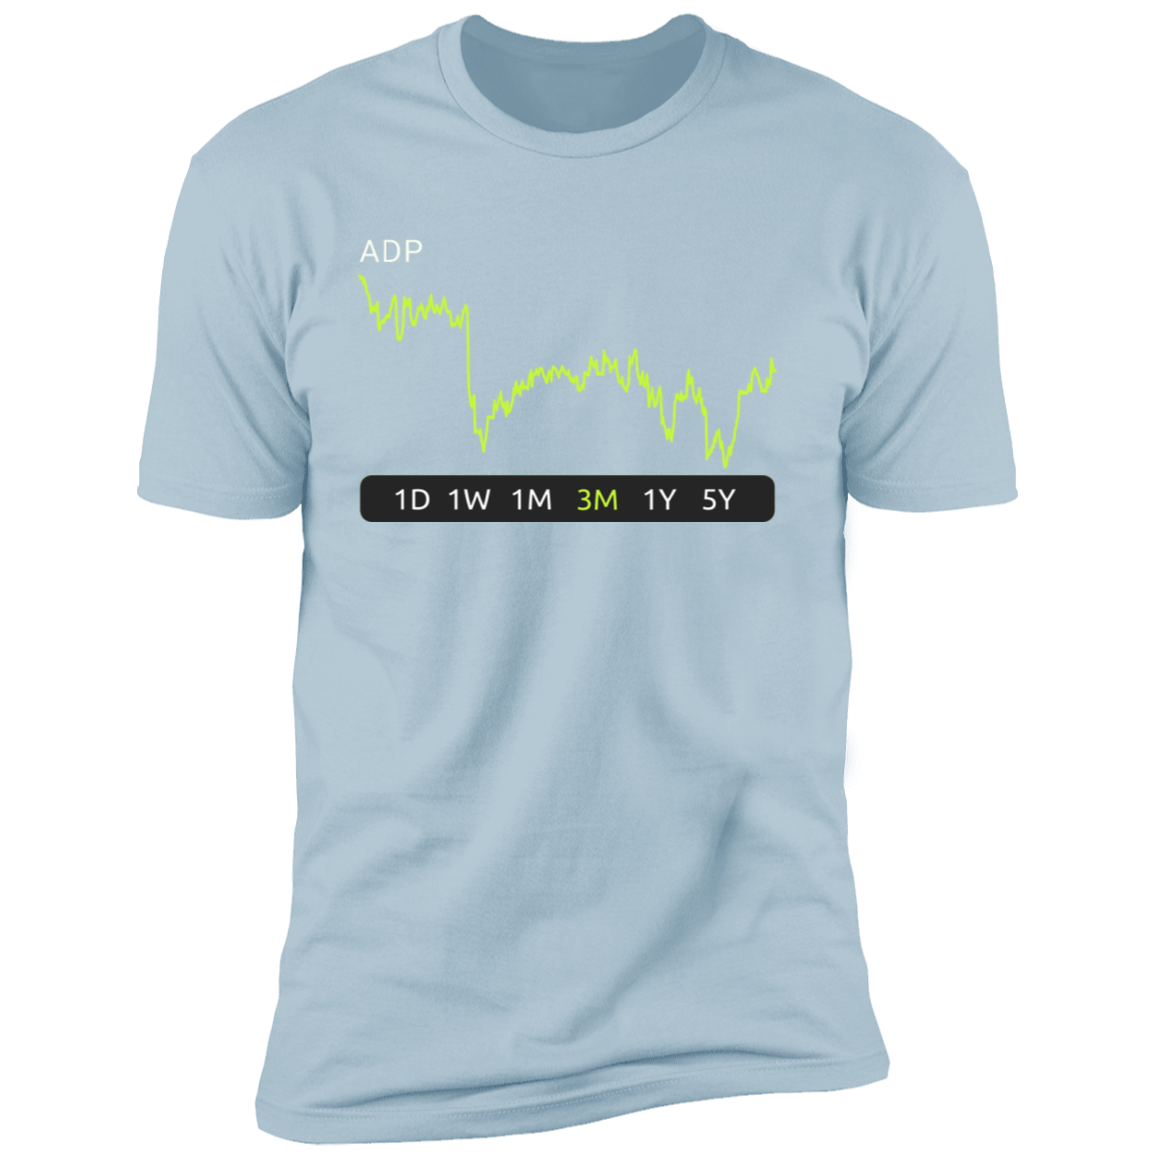 ADP Stock 3m Premium T-Shirt